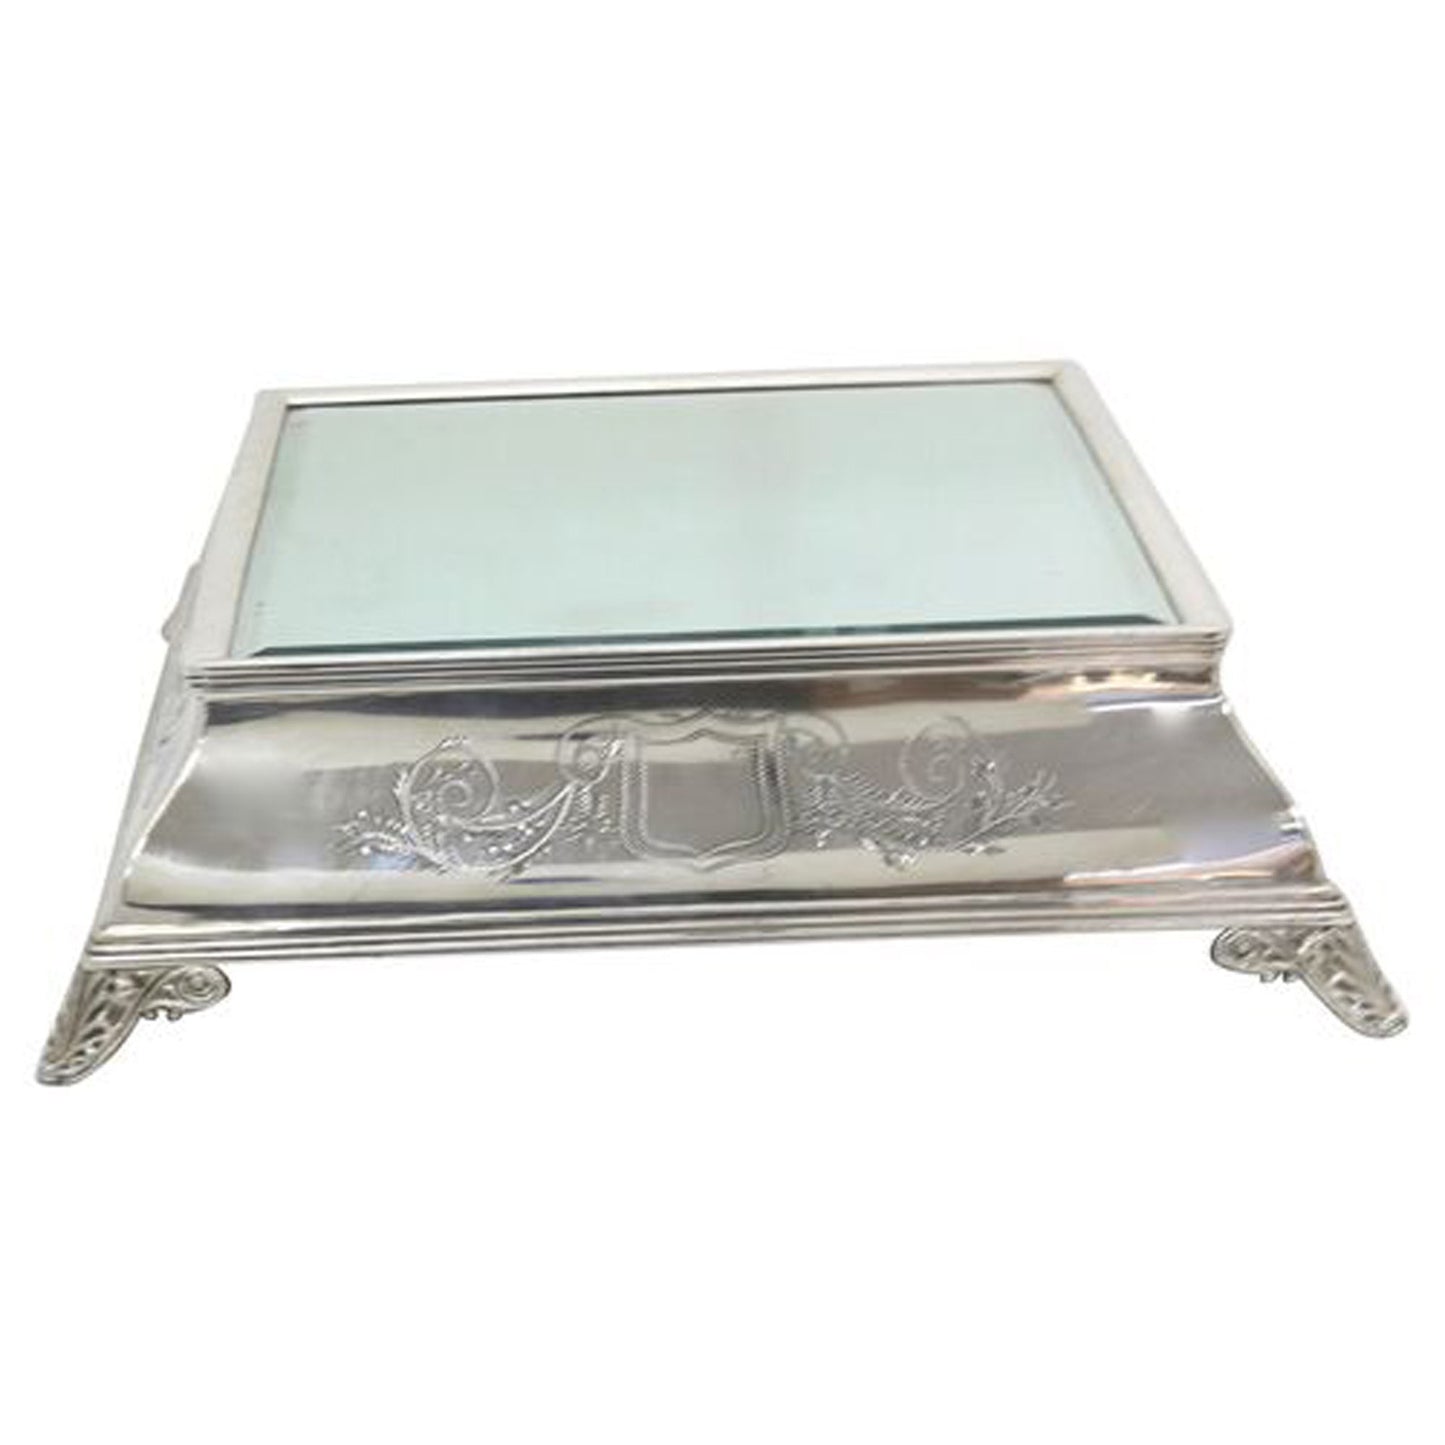 19th Century Silver-Plate Art Deco Mirrored Cake Stand w. Storage Box